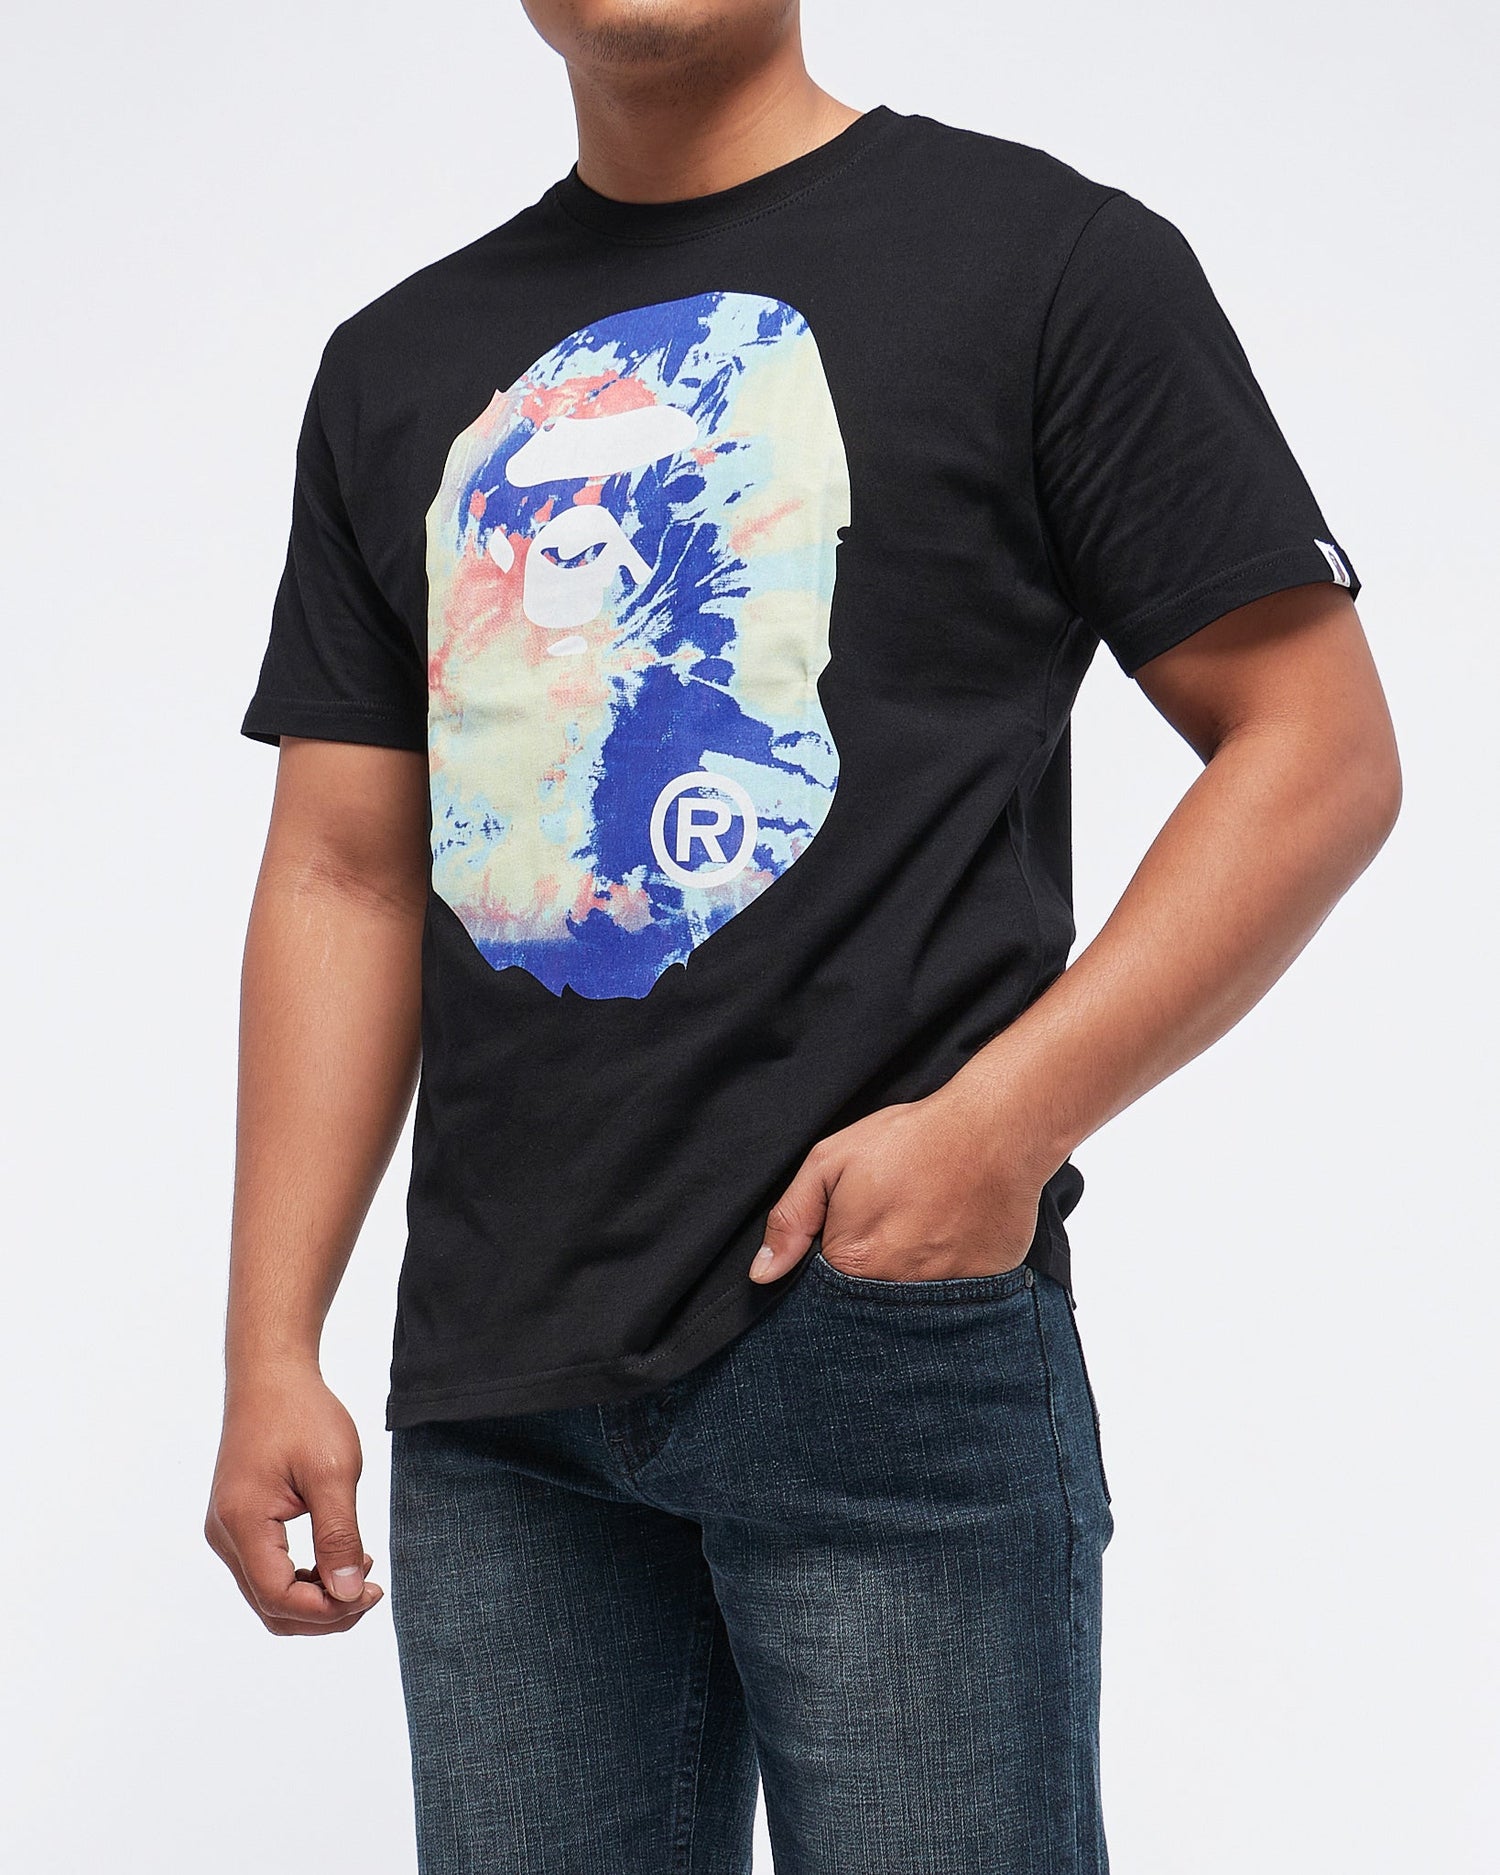 MOI OUTFIT-Tie dye Gorrilla Face Printed Men T-Shirt 17.90